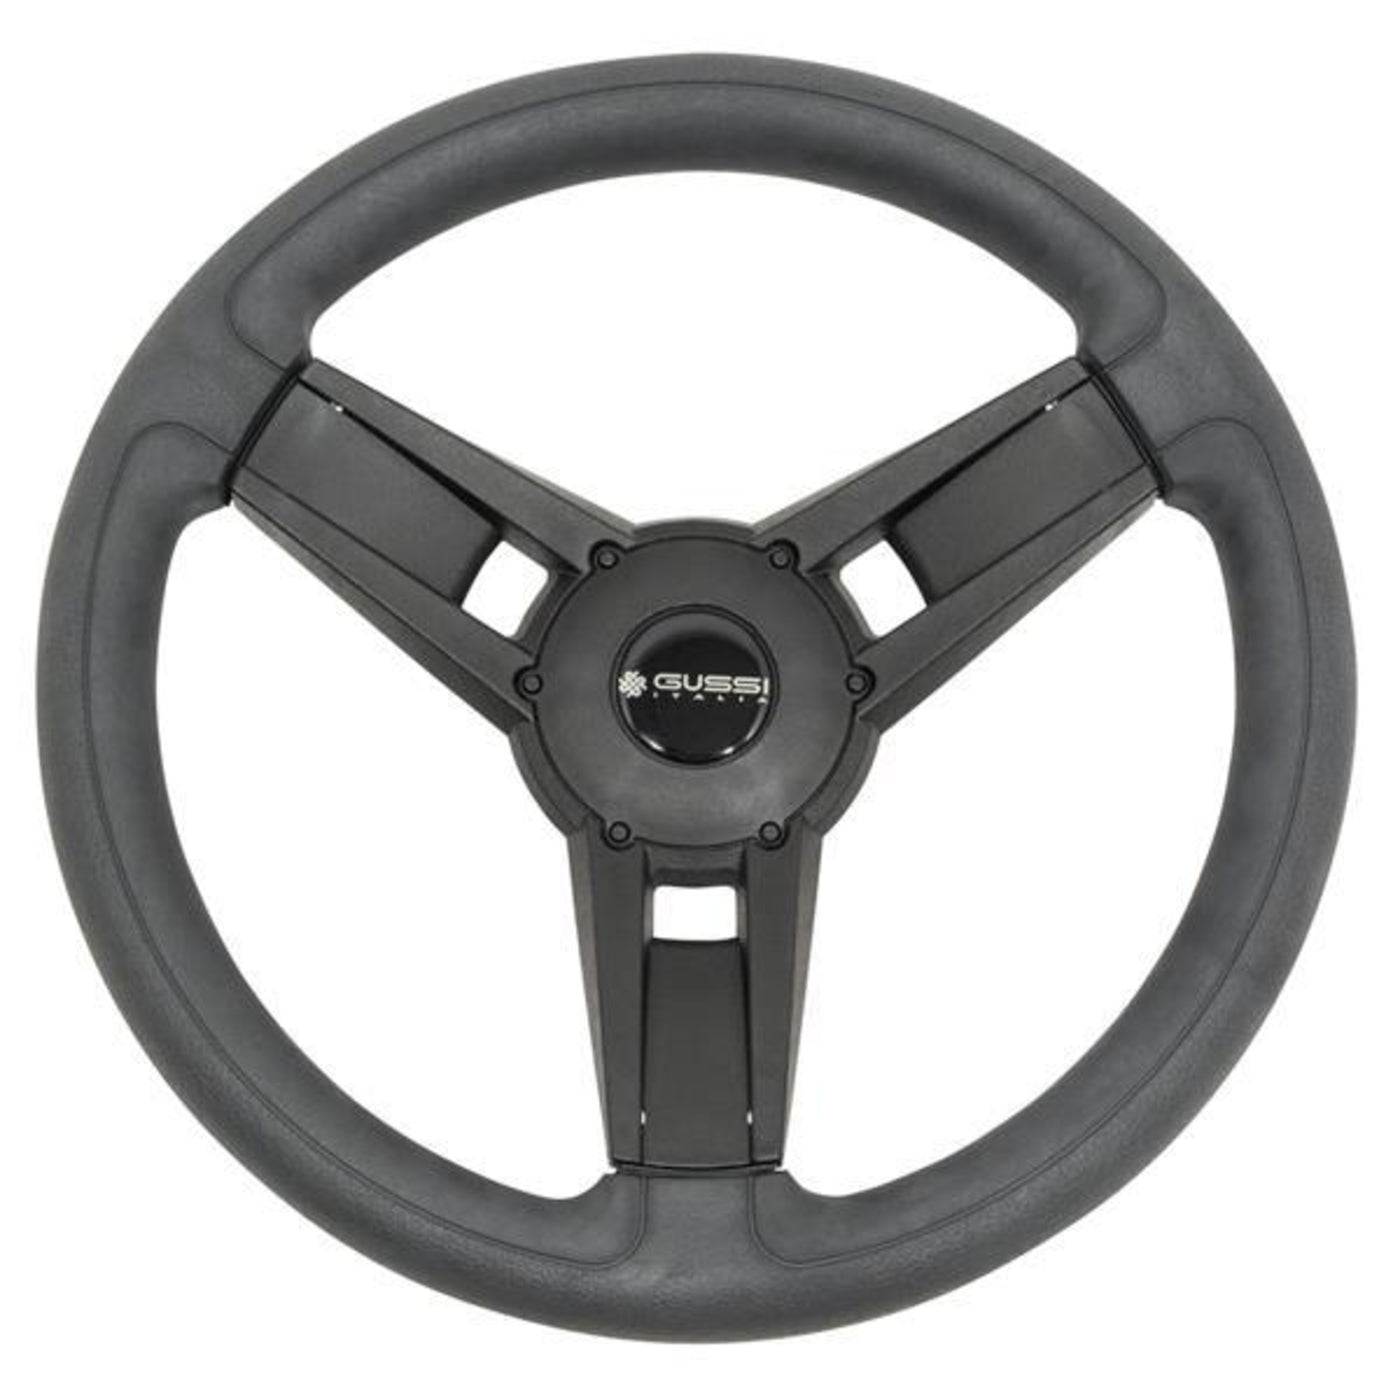 Gussi Italia¬Æ Giazza Black Steering Wheel For All E-Z-GO TXT / RXV Models